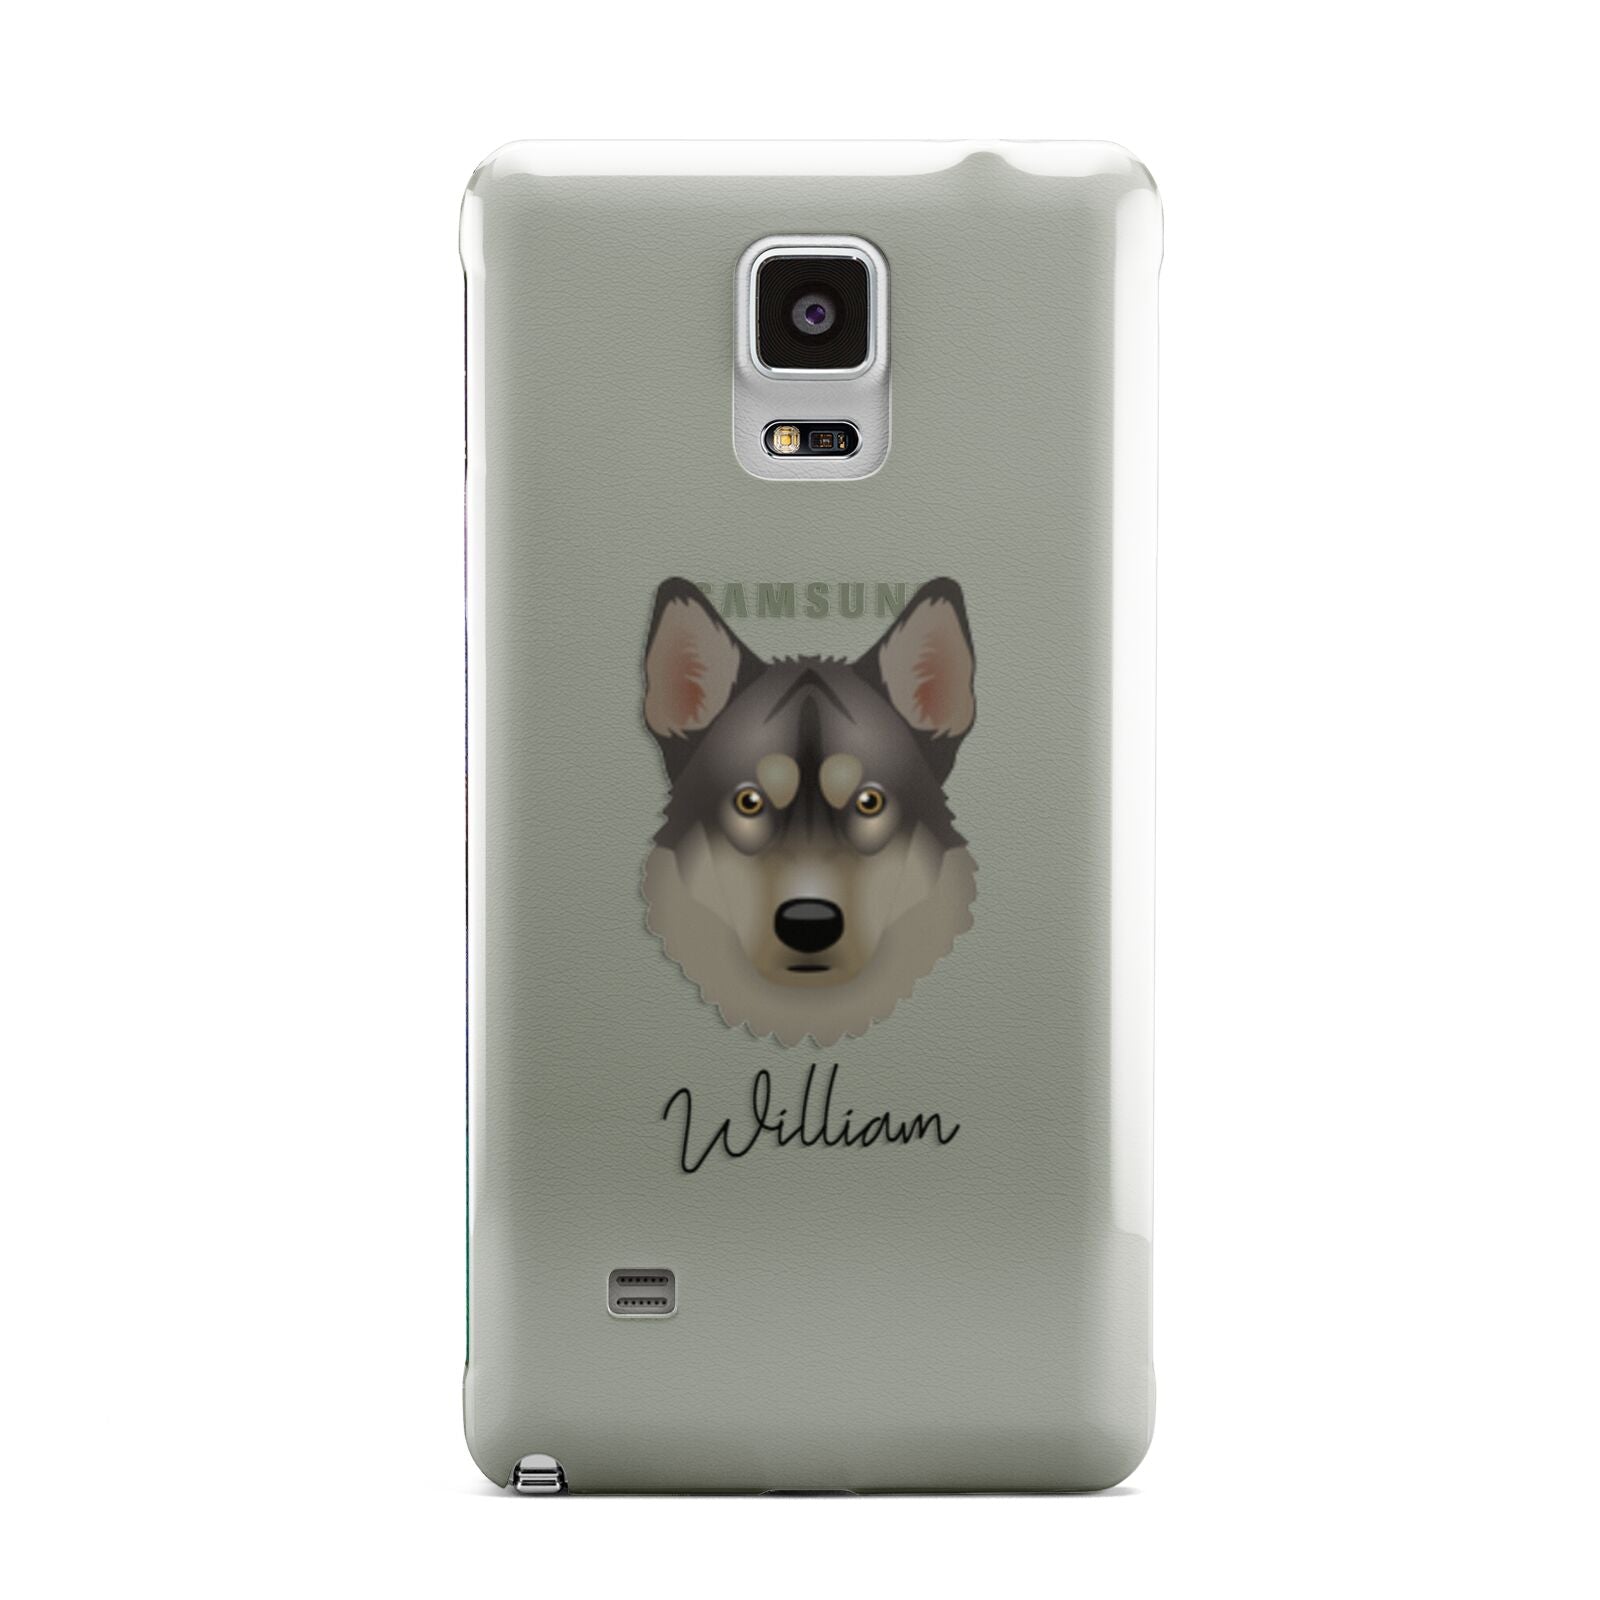 Tamaskan Personalised Samsung Galaxy Note 4 Case